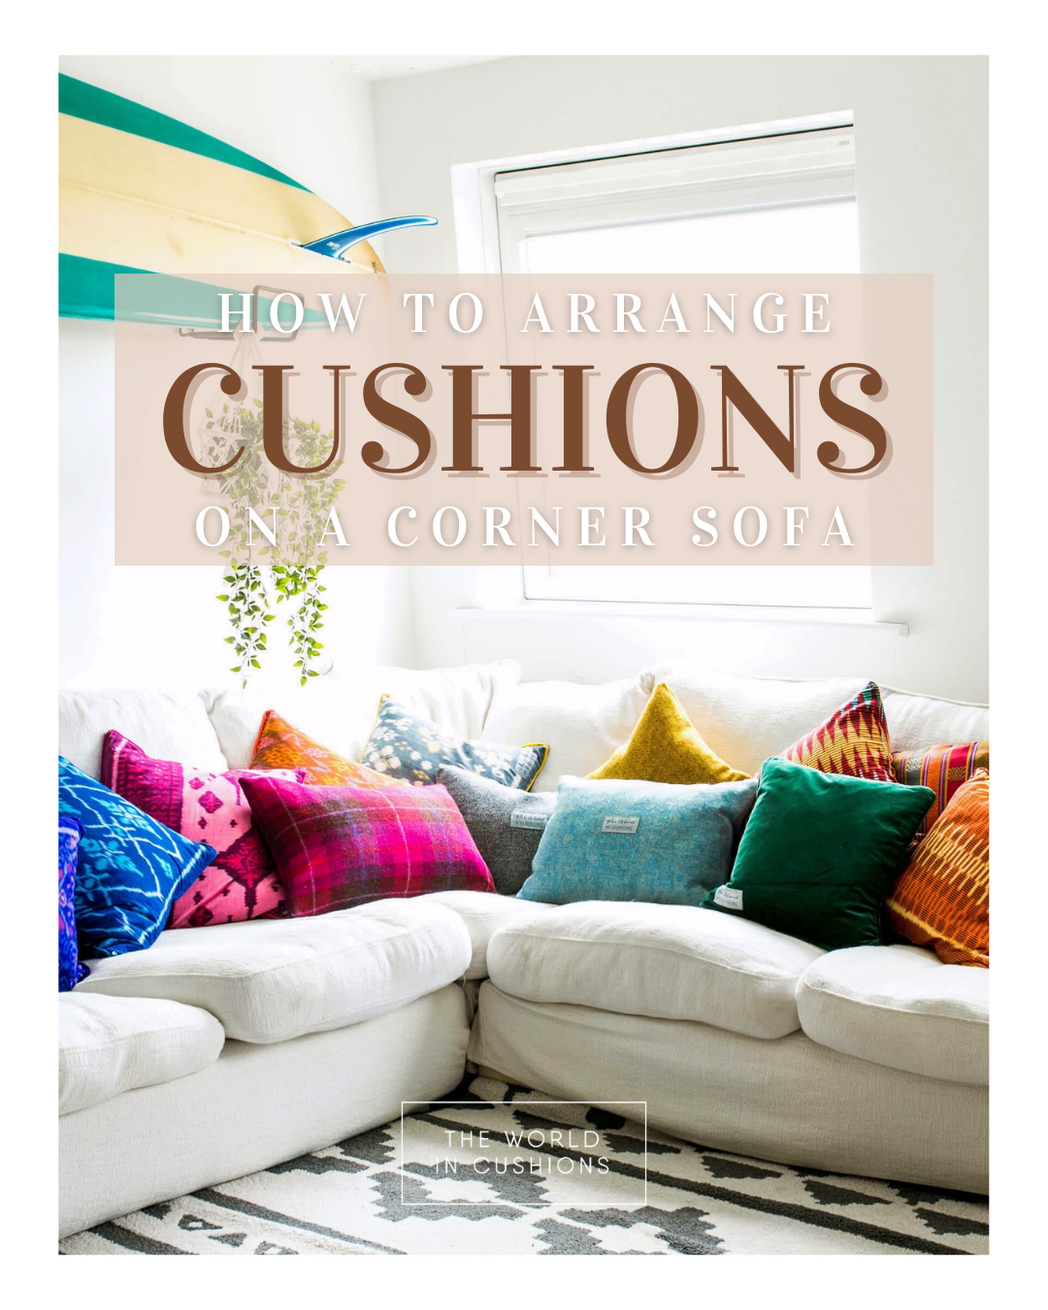 How to arrange cushions on a corner sofa?